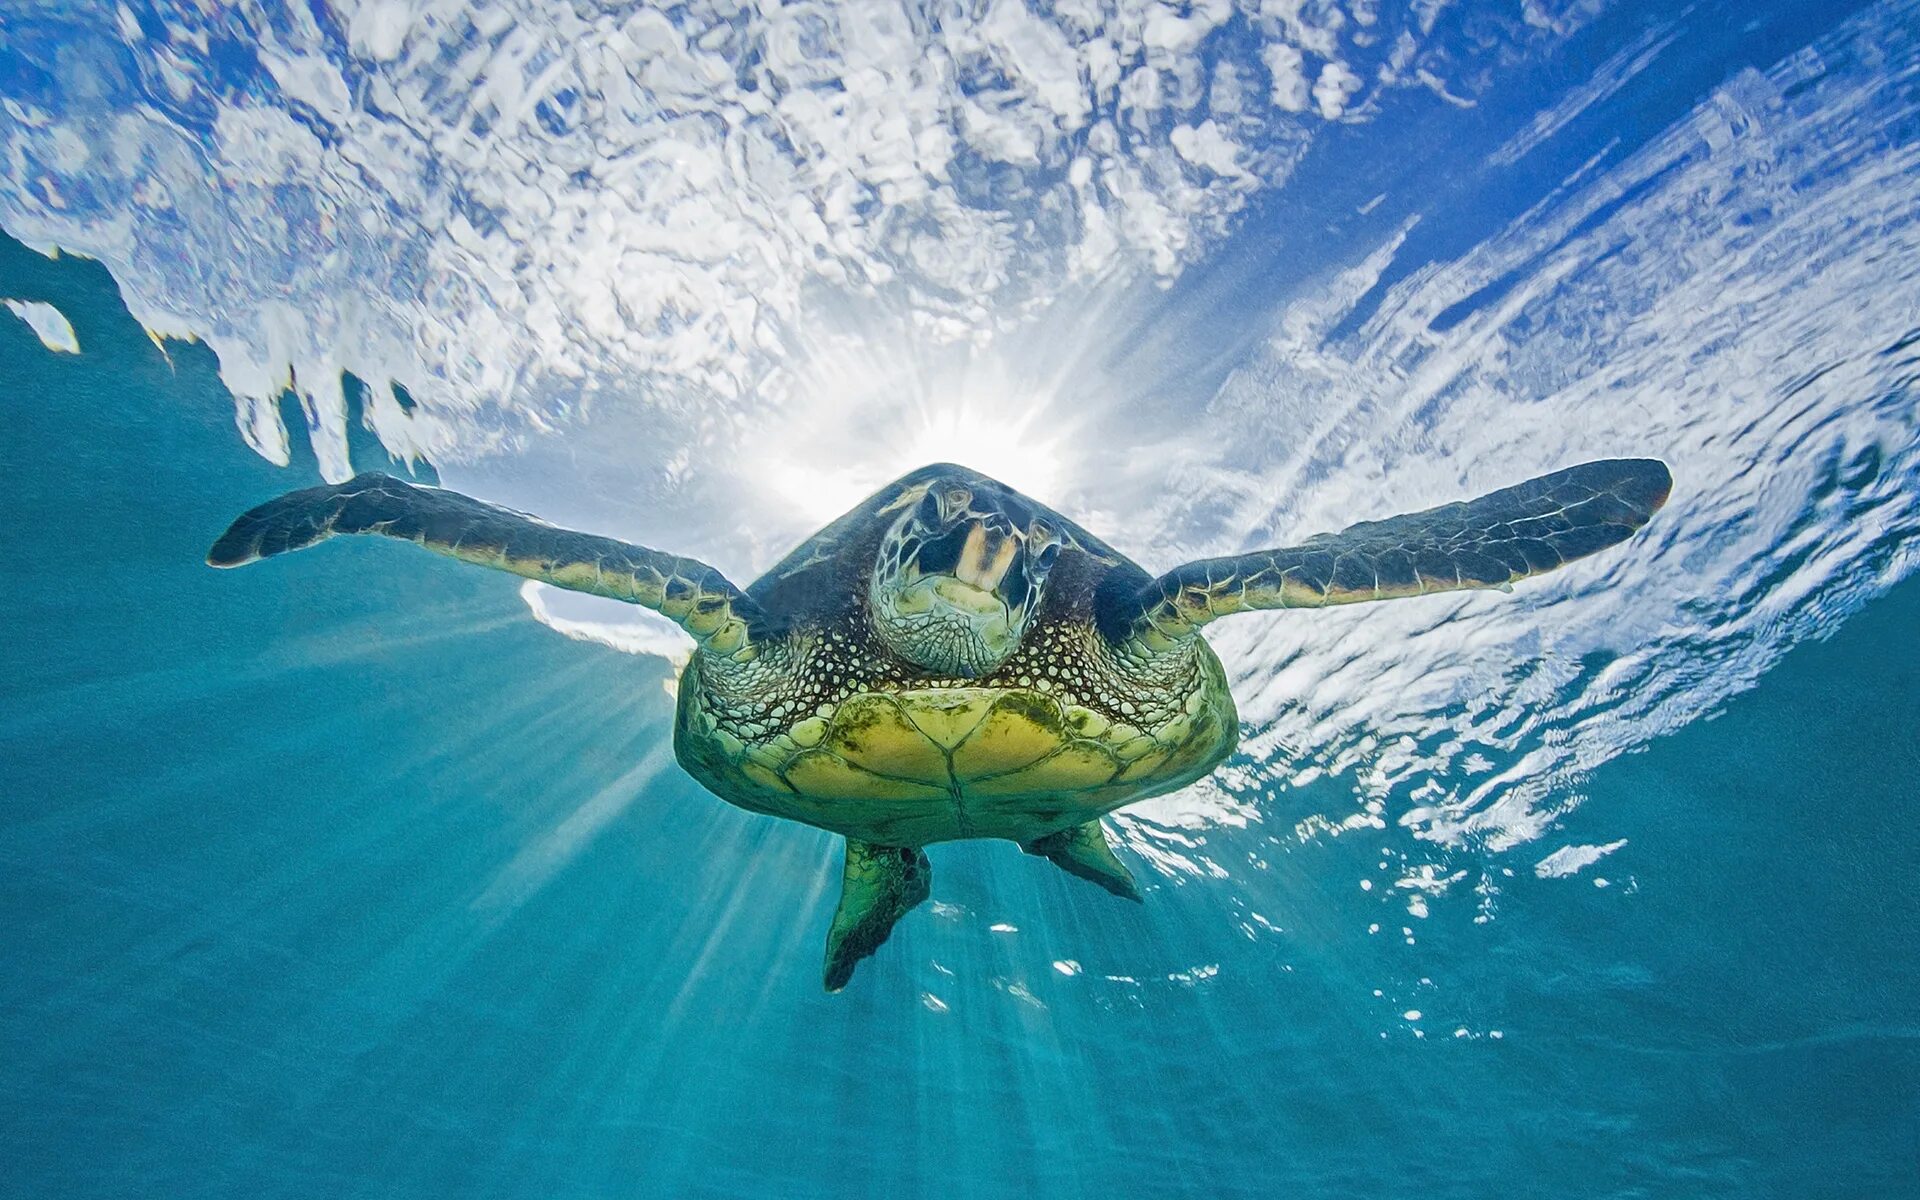 Turtle x. Морские черепахи черепахи. Черепаха Каретта (логгерхед). Голубая морская черепаха. Черепаха бисса.